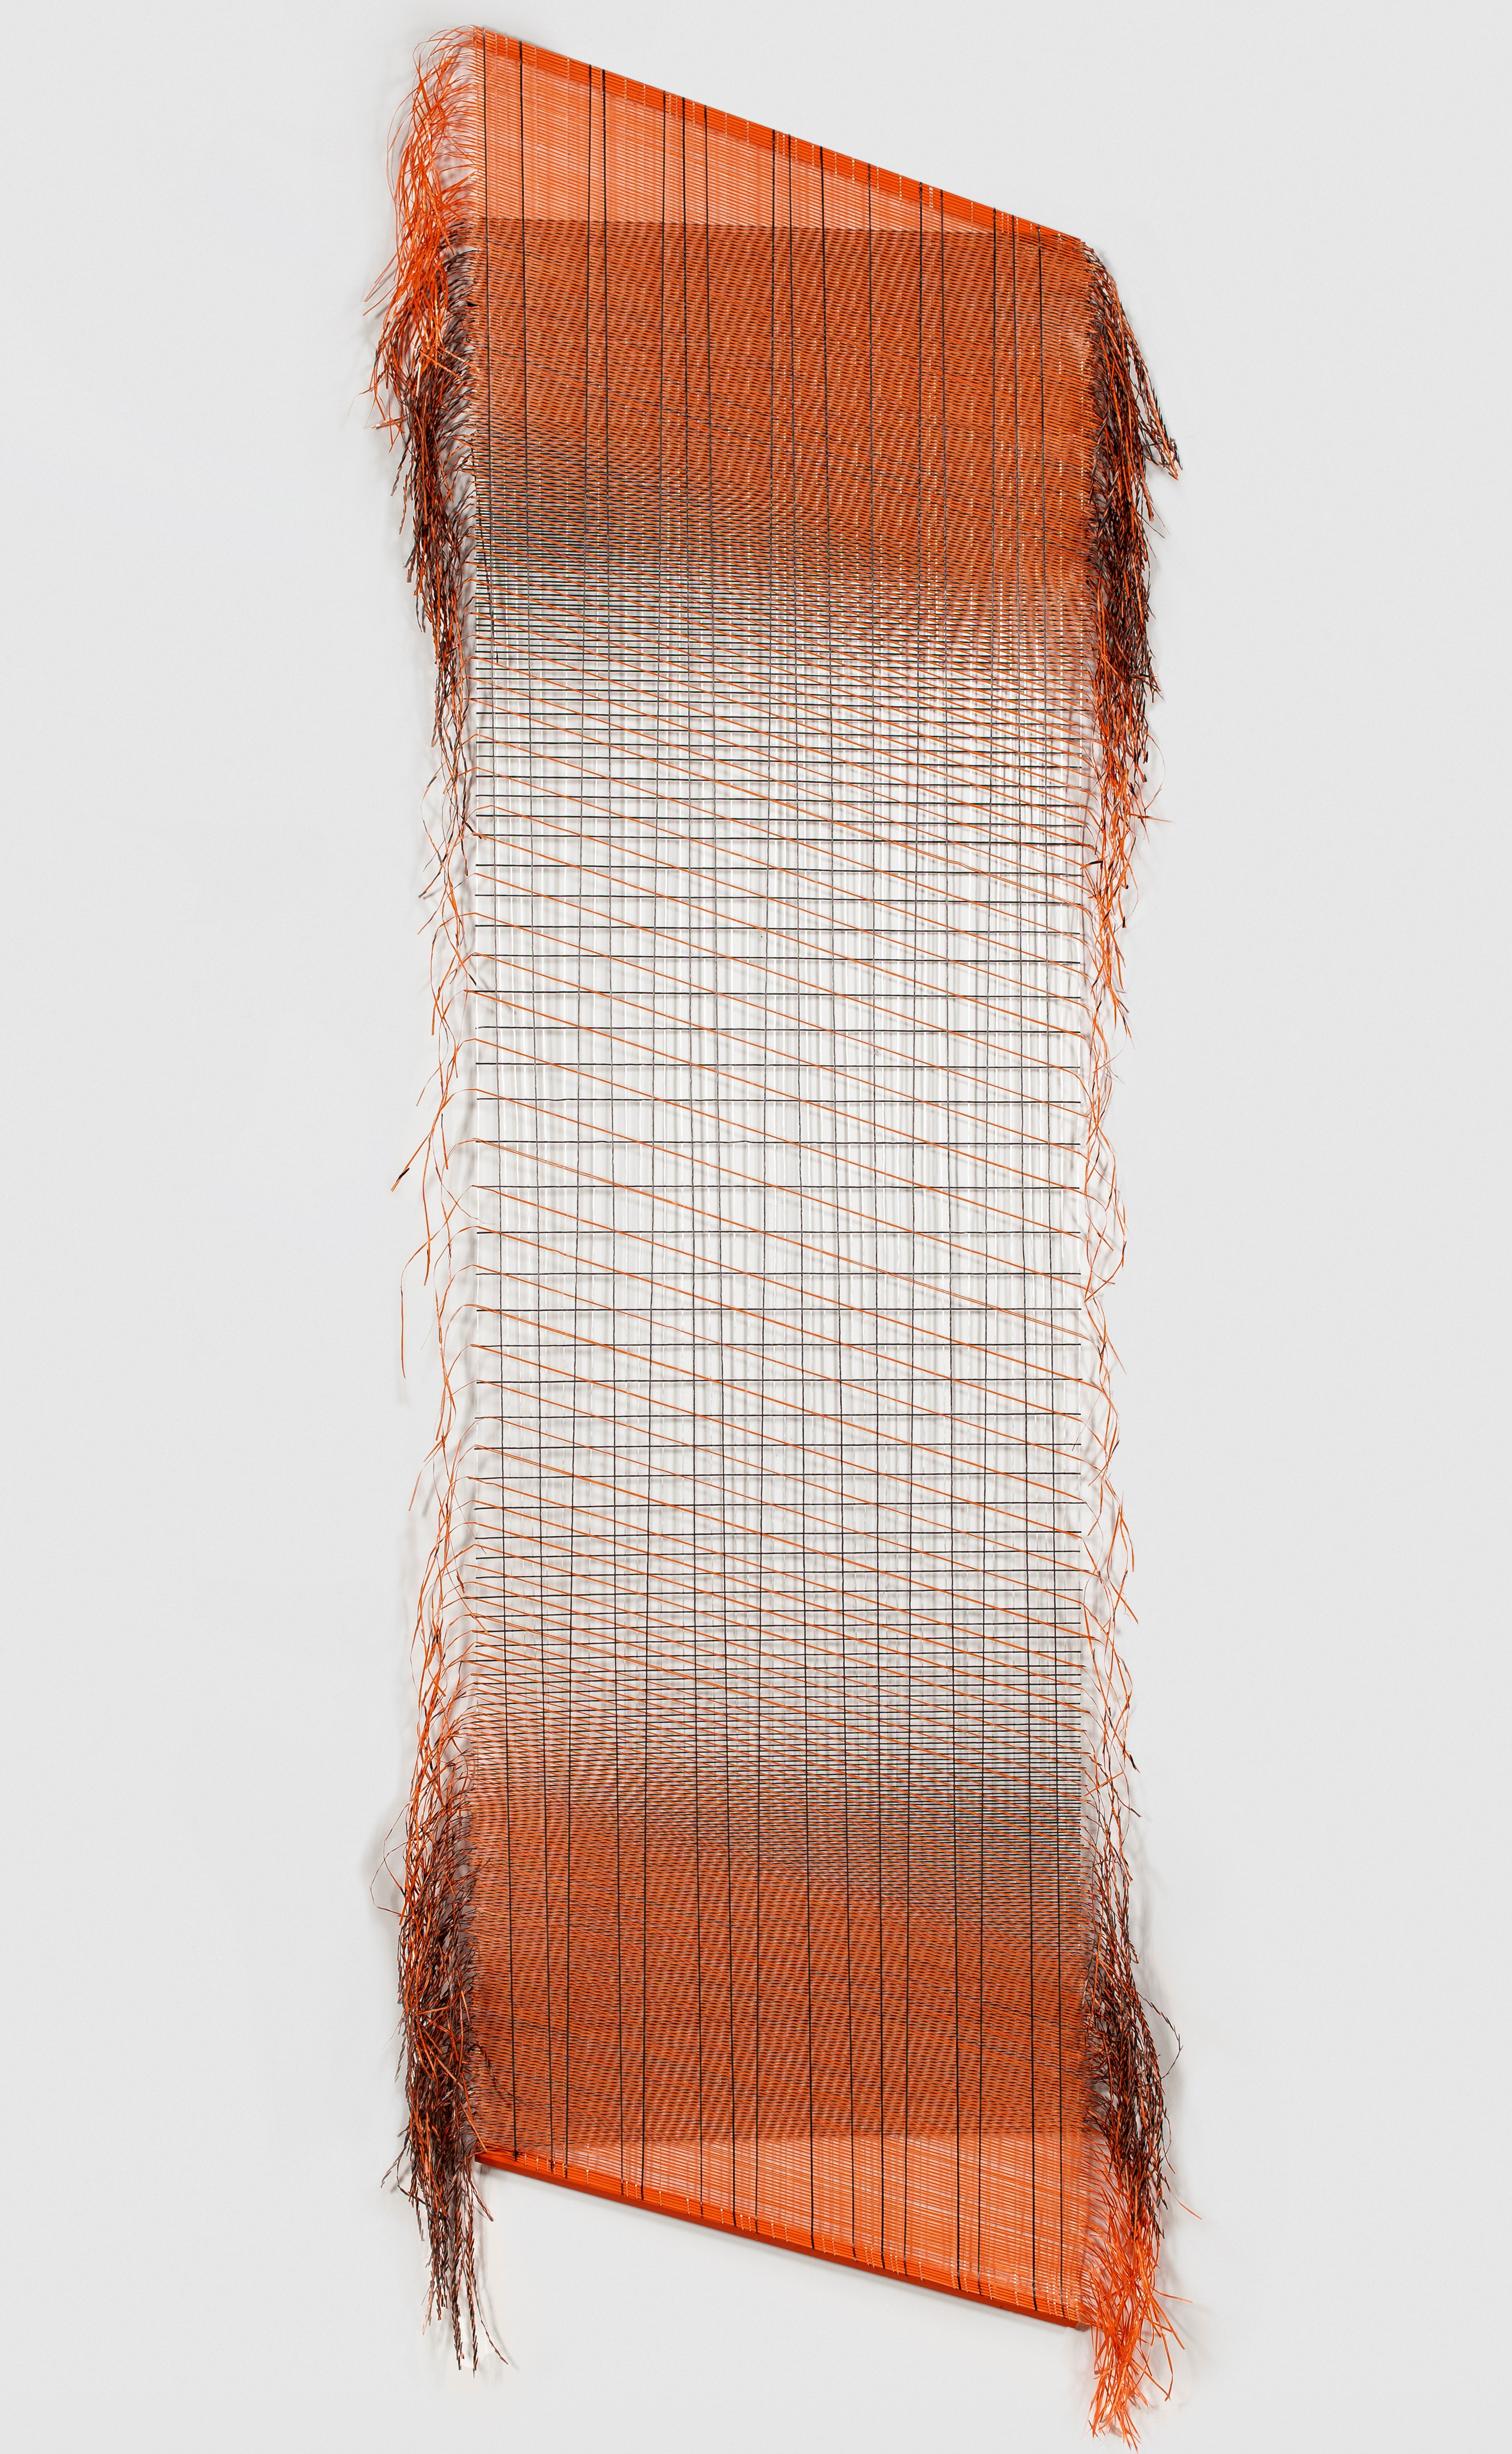 Shades.BW+R, design by Migliore+Servetto Architects cm 80x 310 in woven charcoal and orange fibres 